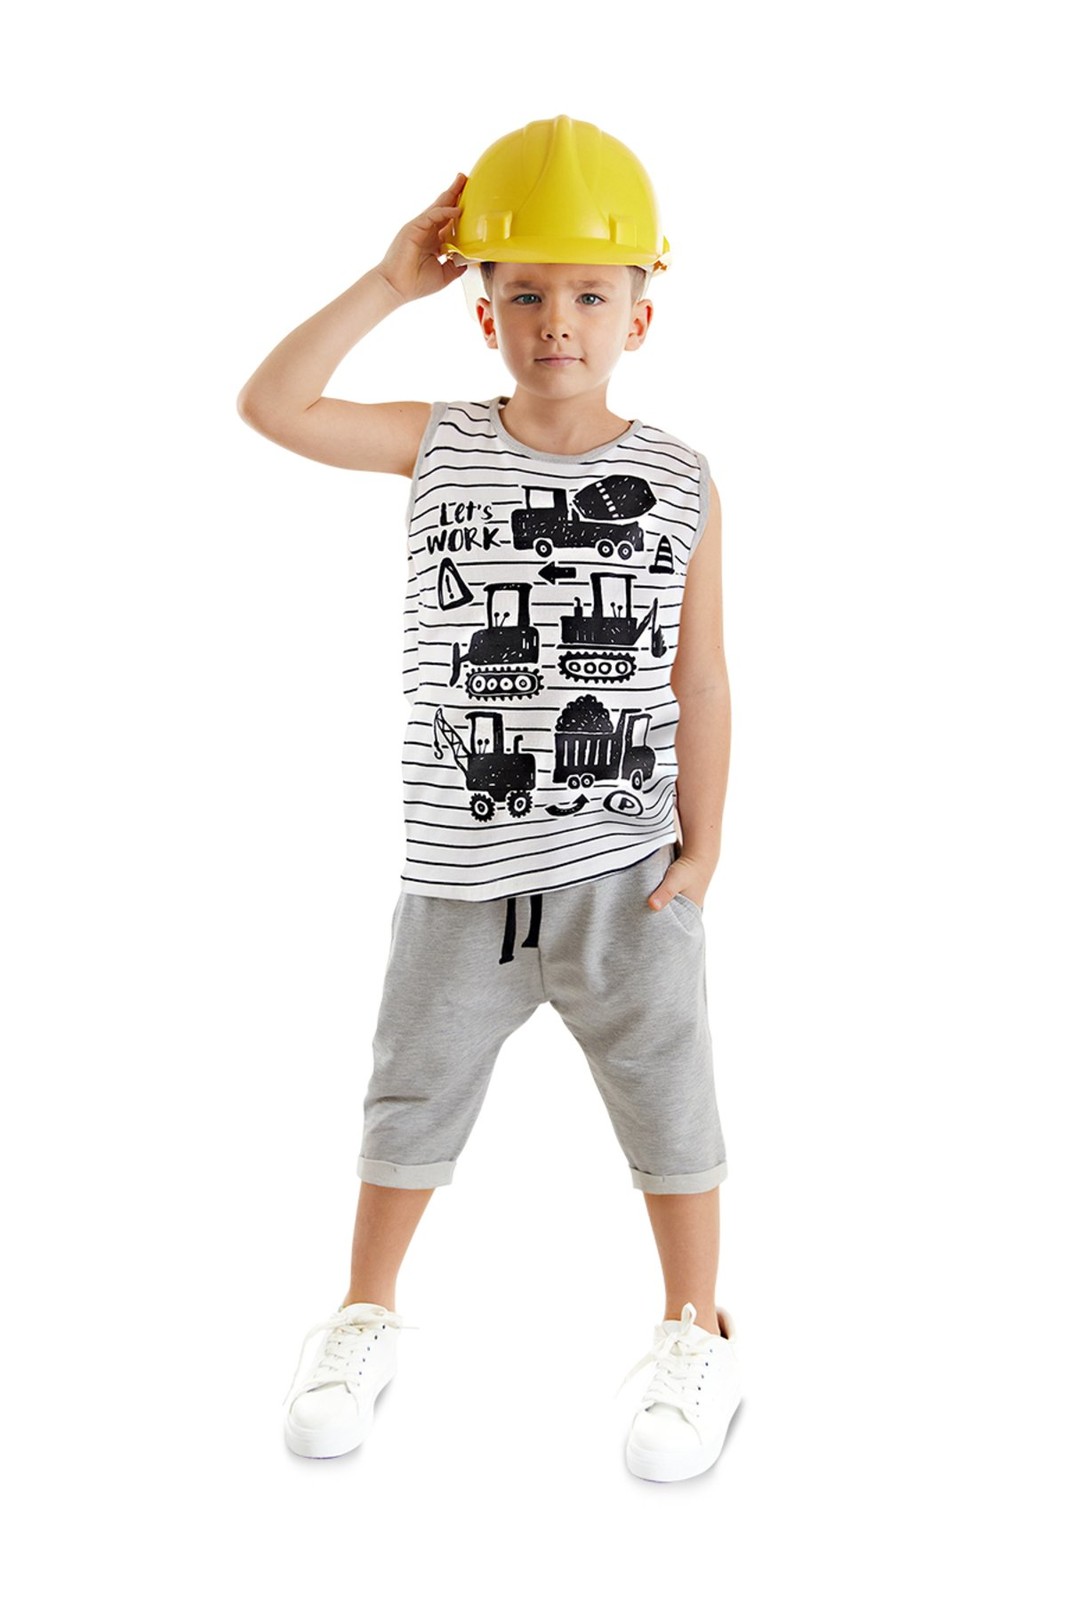 Denokids Boys Construction Truck T-shirt Capri Shorts Set